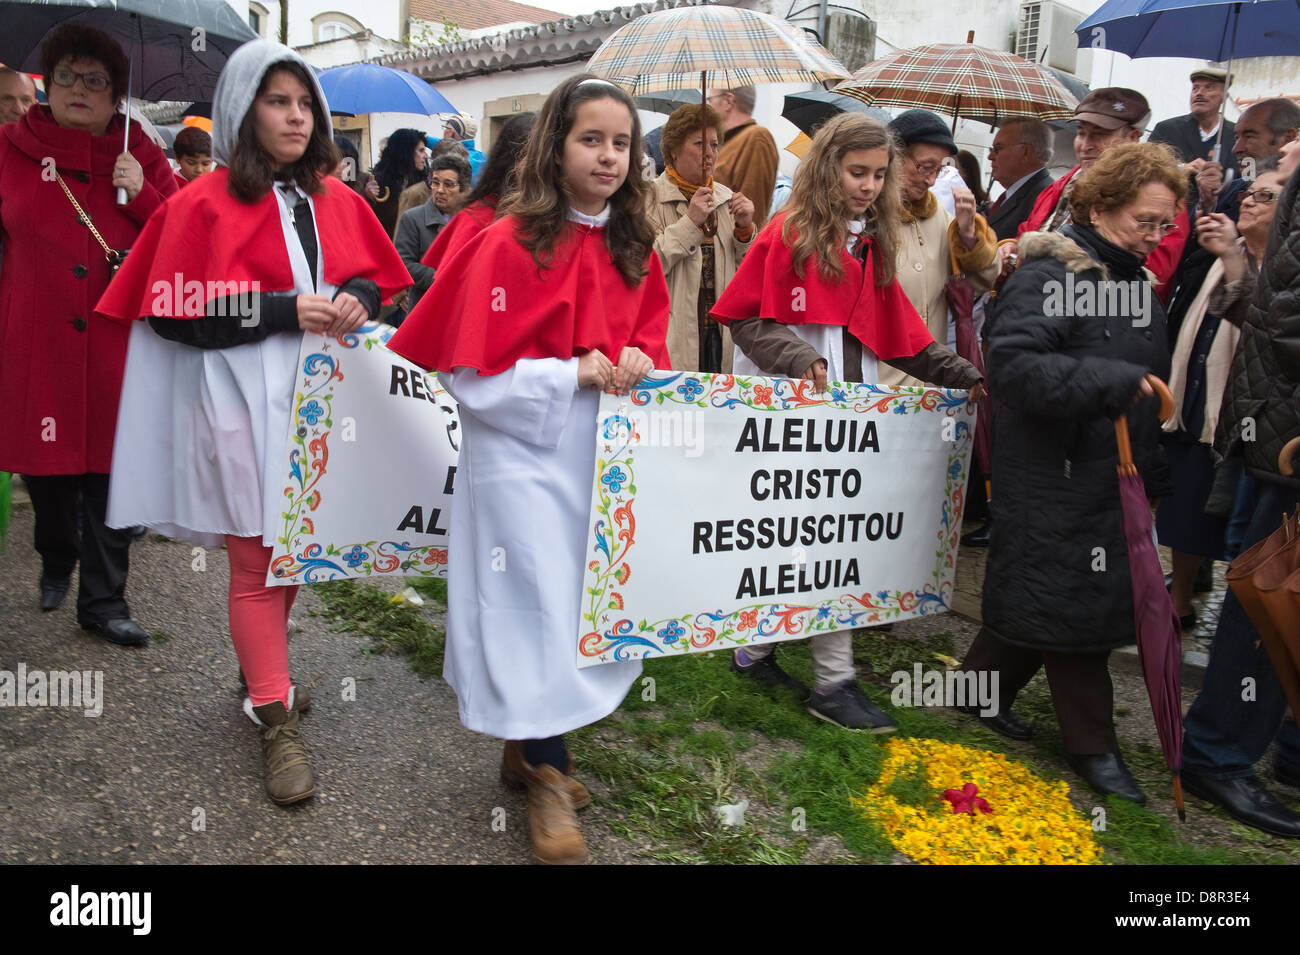 Children carry banners 'Aleluia Cristo Ressuscitou Aleluia' Easter Sunday Flower Torches Festival São Brás de Alportel Portugal Stock Photo